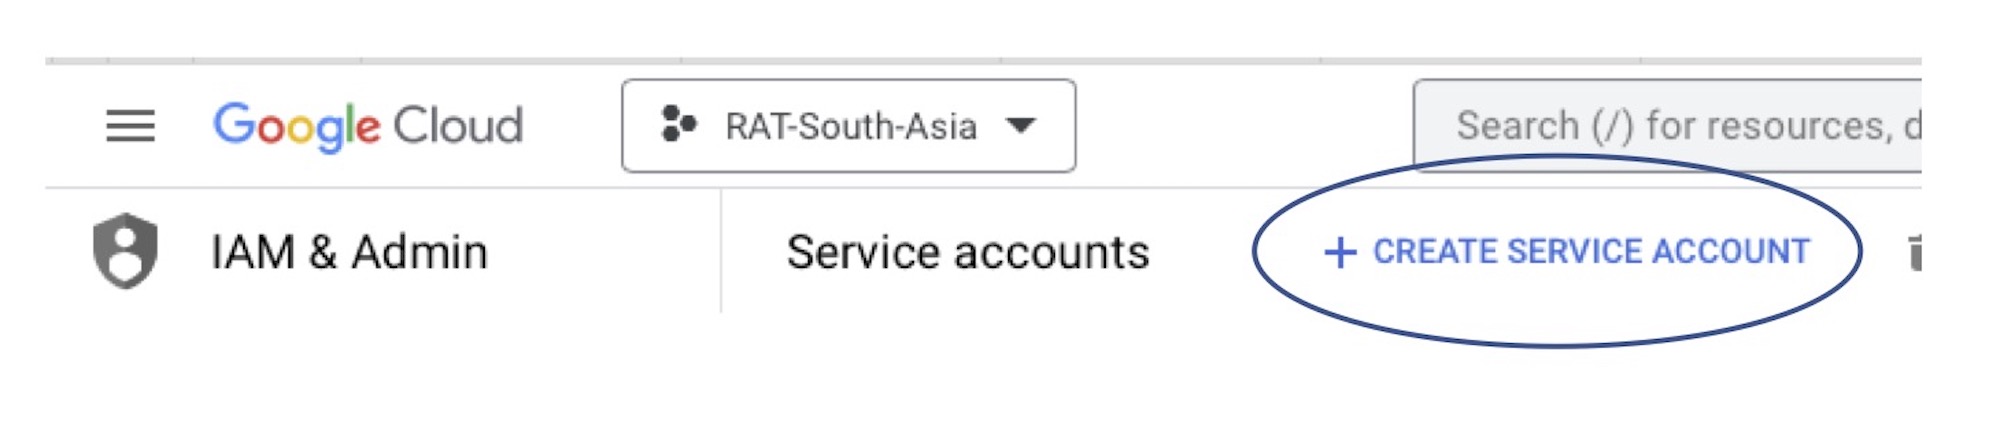 creating service account button screenshot